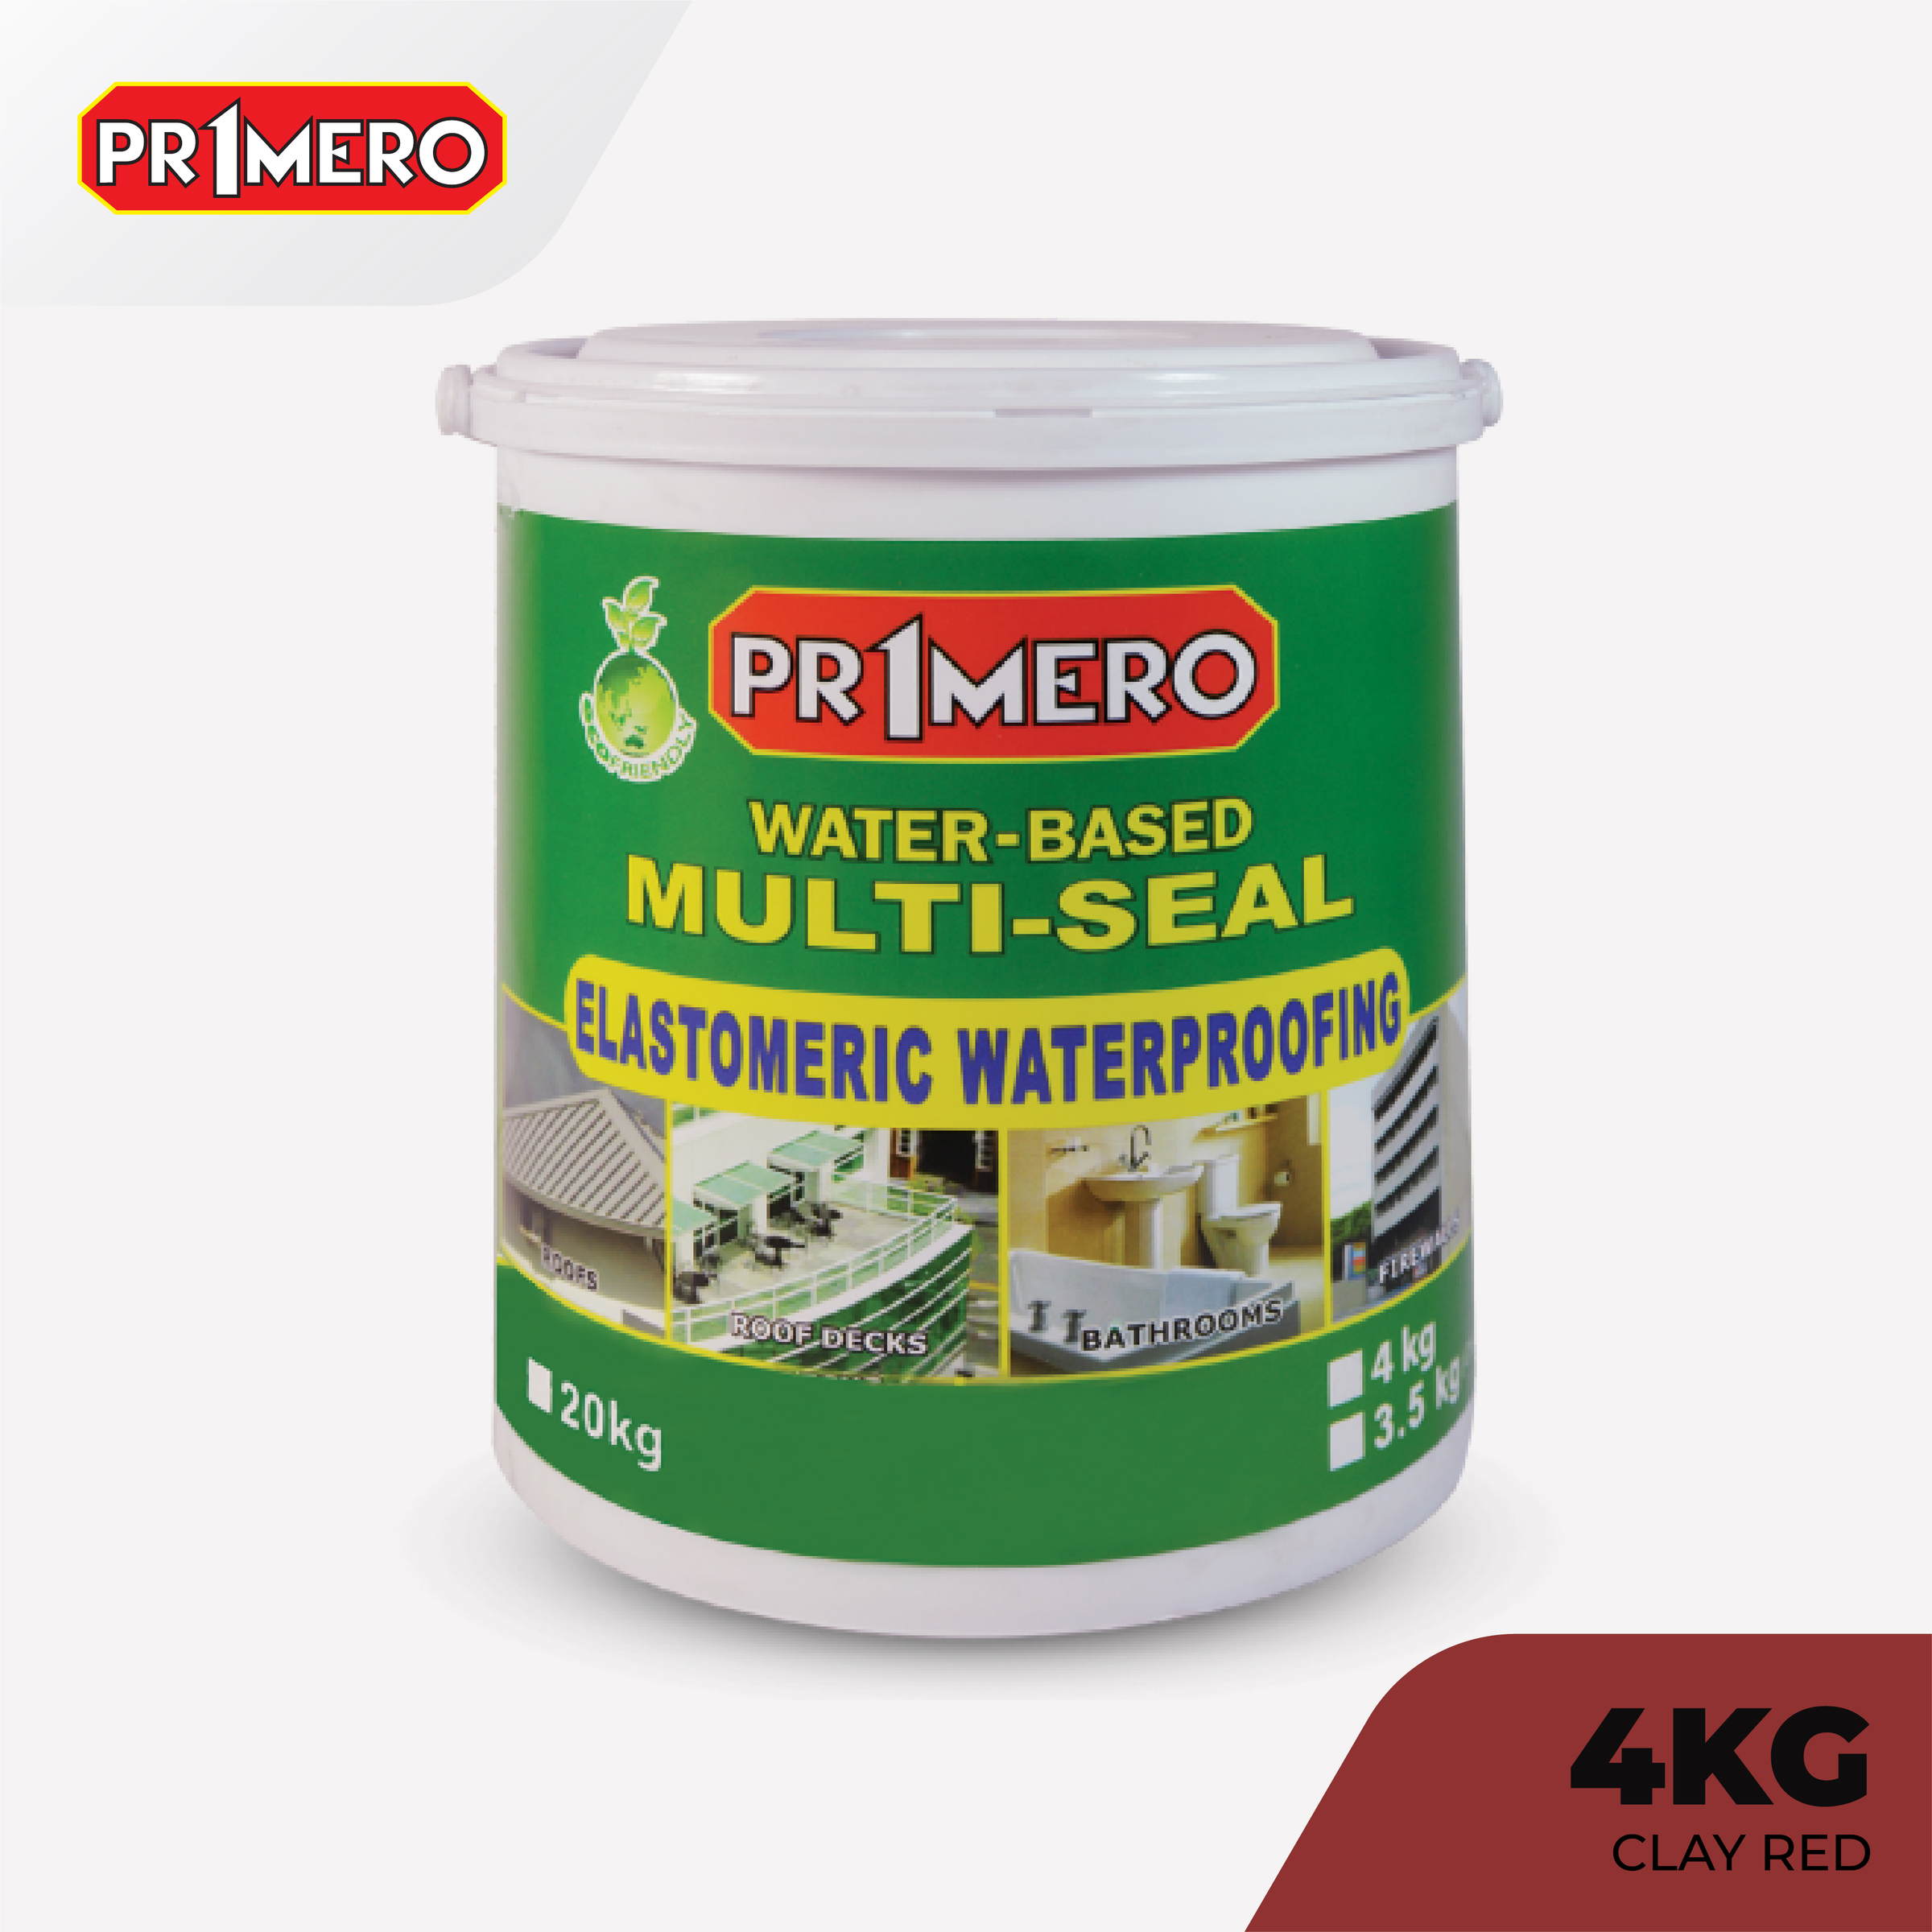 Primero Multi-Seal Elastomeric Waterproofing Sealant Clay Red - 4Kg